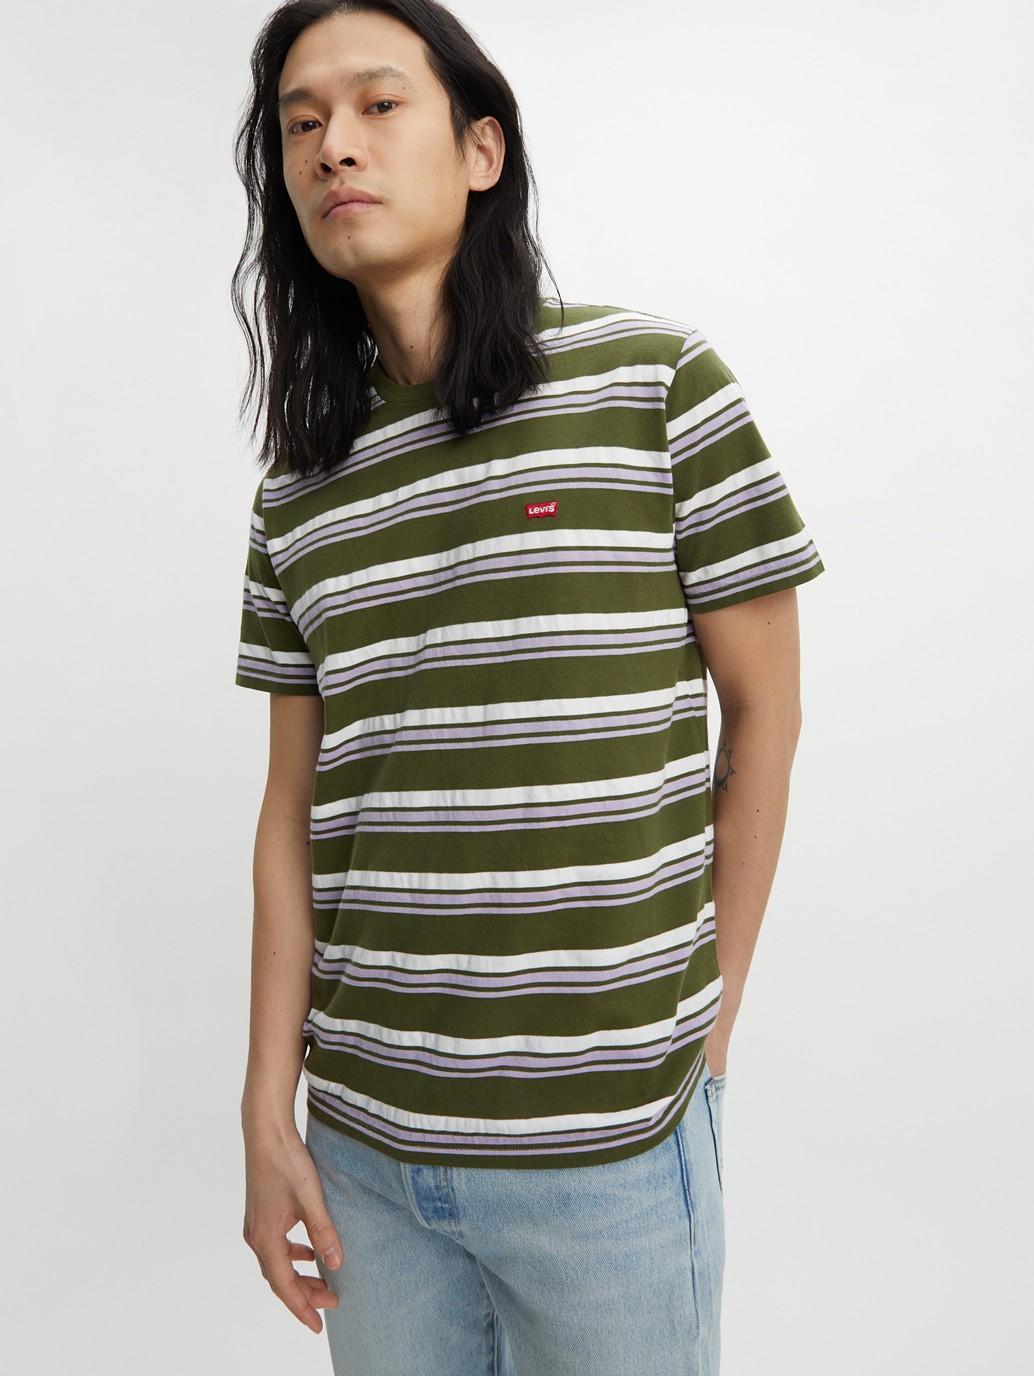 Buy Levi's® Men's Original Housemark T-Shirt| Levi’s® Official Online ...